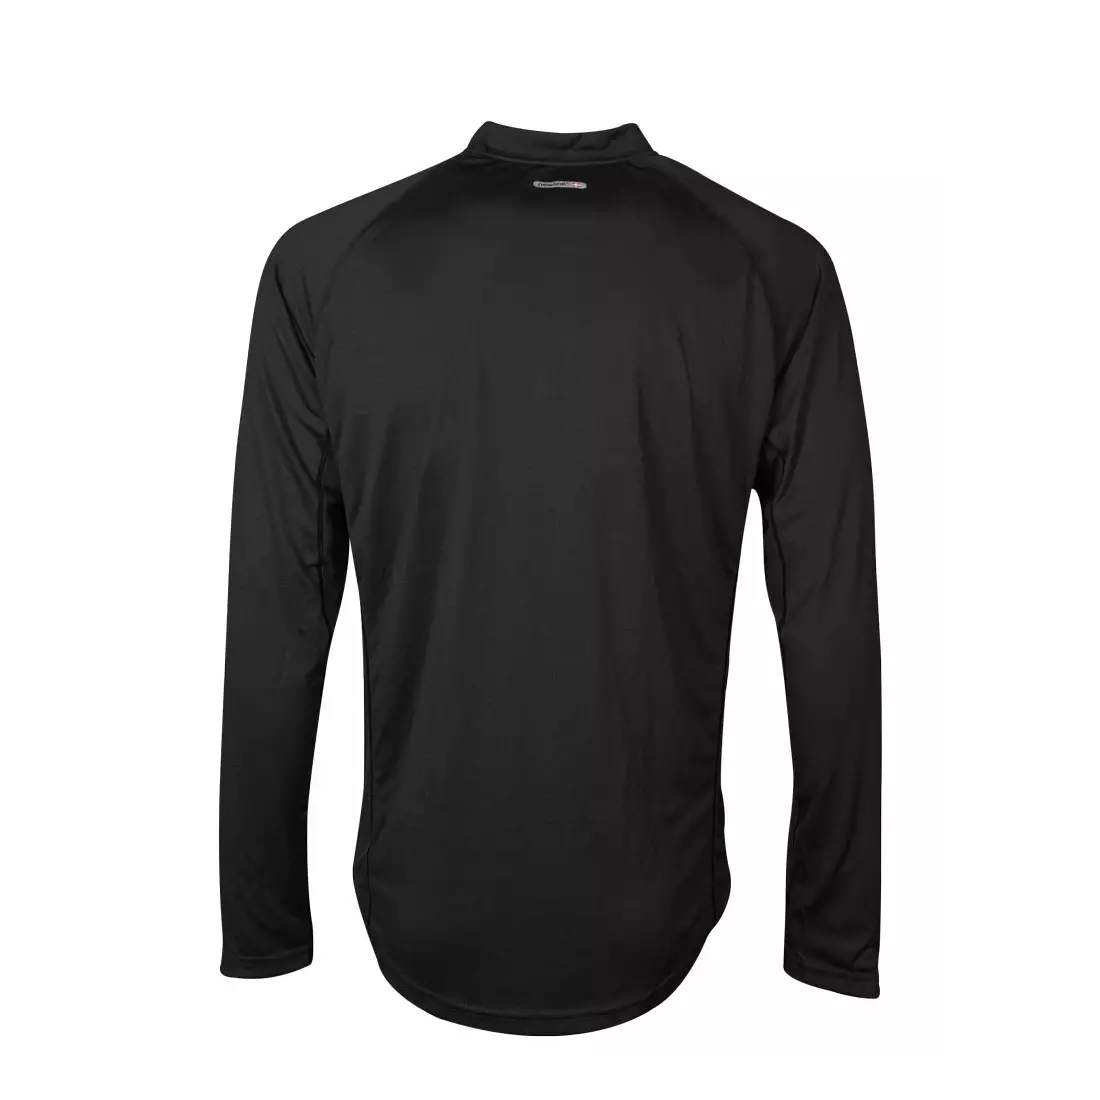 NEWLINE BASE ZIP SHIRT - pánské běžecké tričko D/R 14370-060